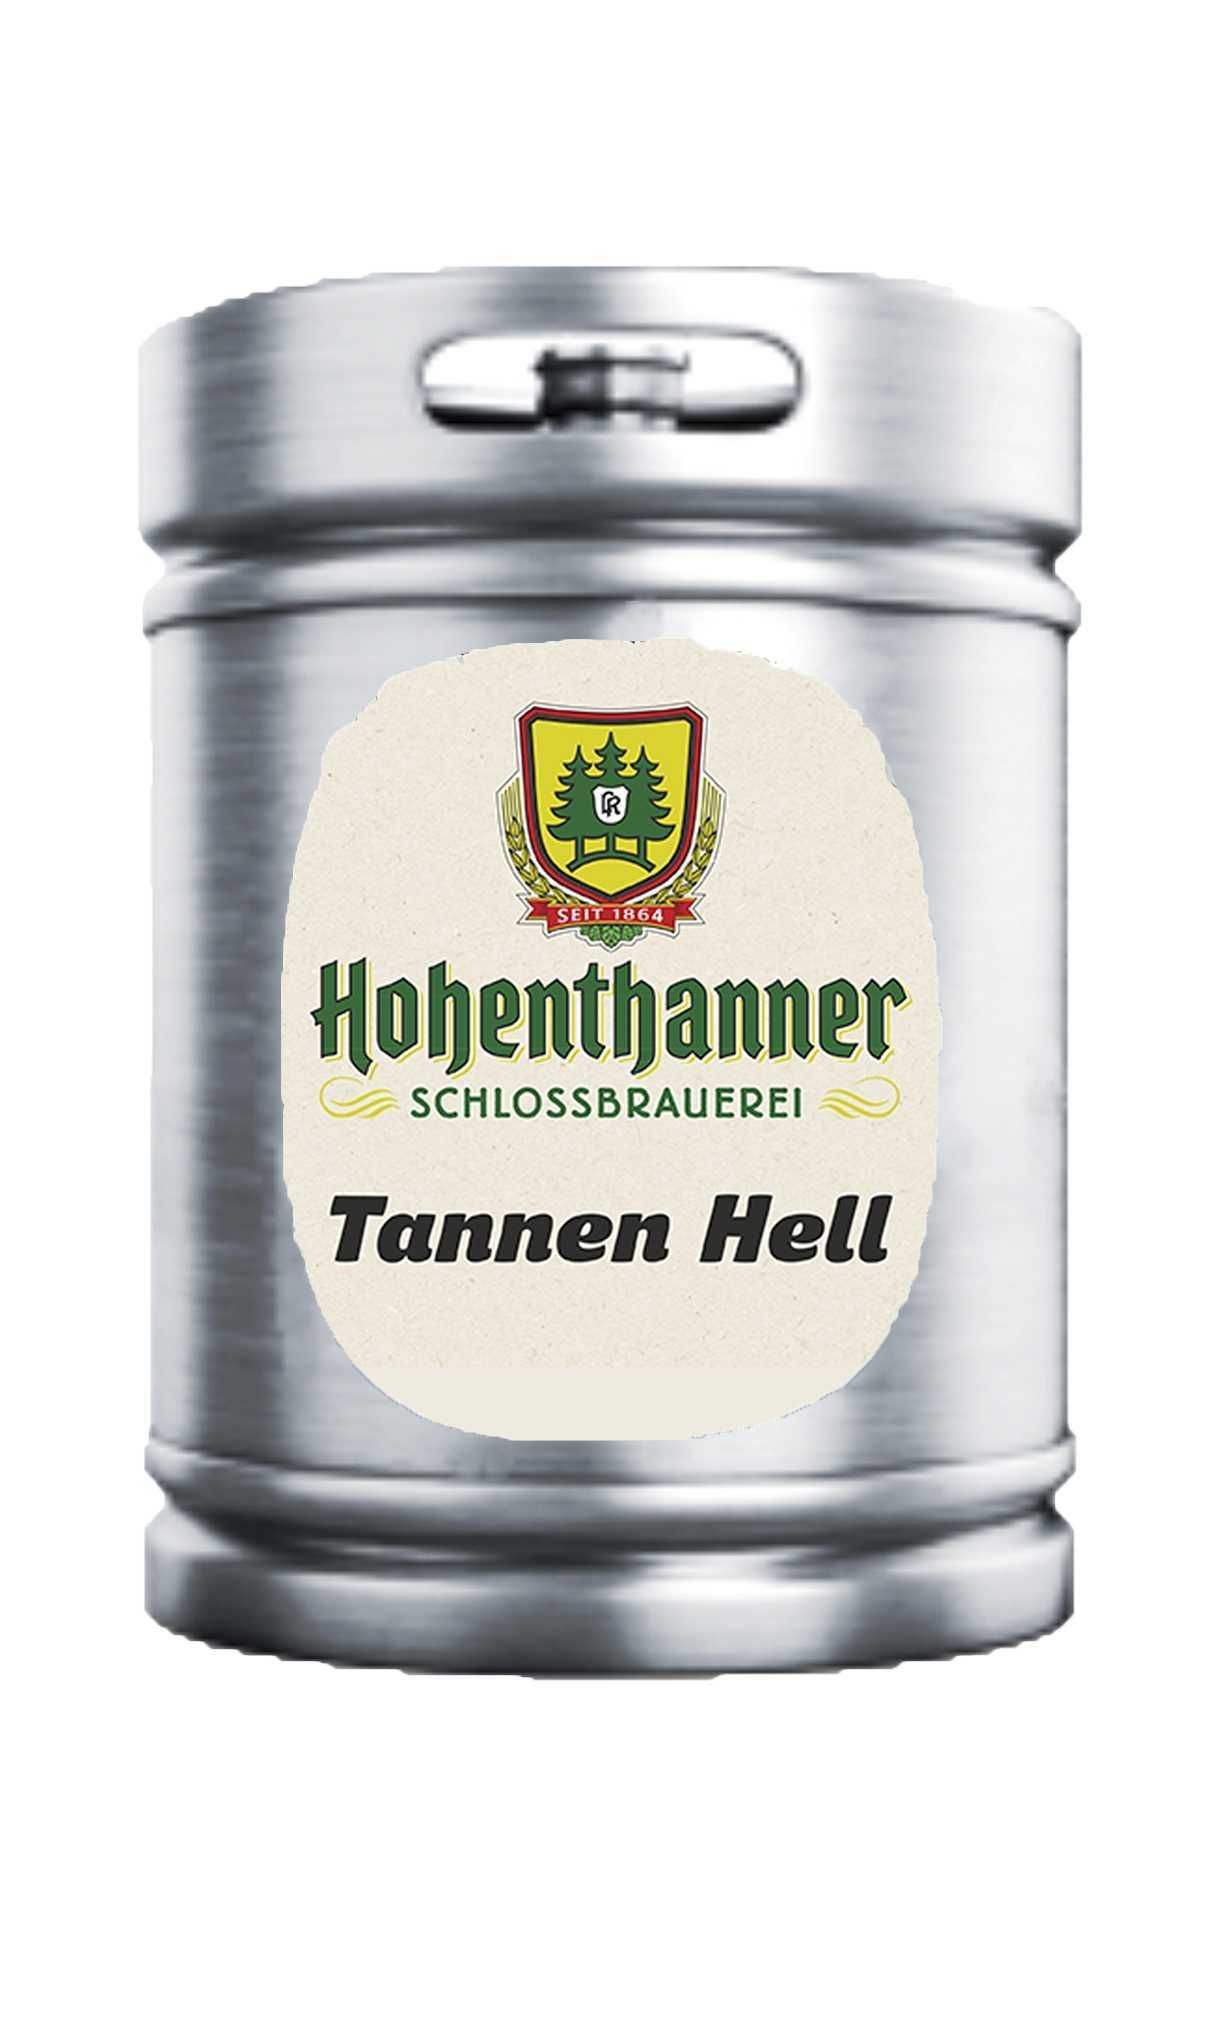 Пиво Хоэнтаннер Таннен Хелль 5,0% (Германия)